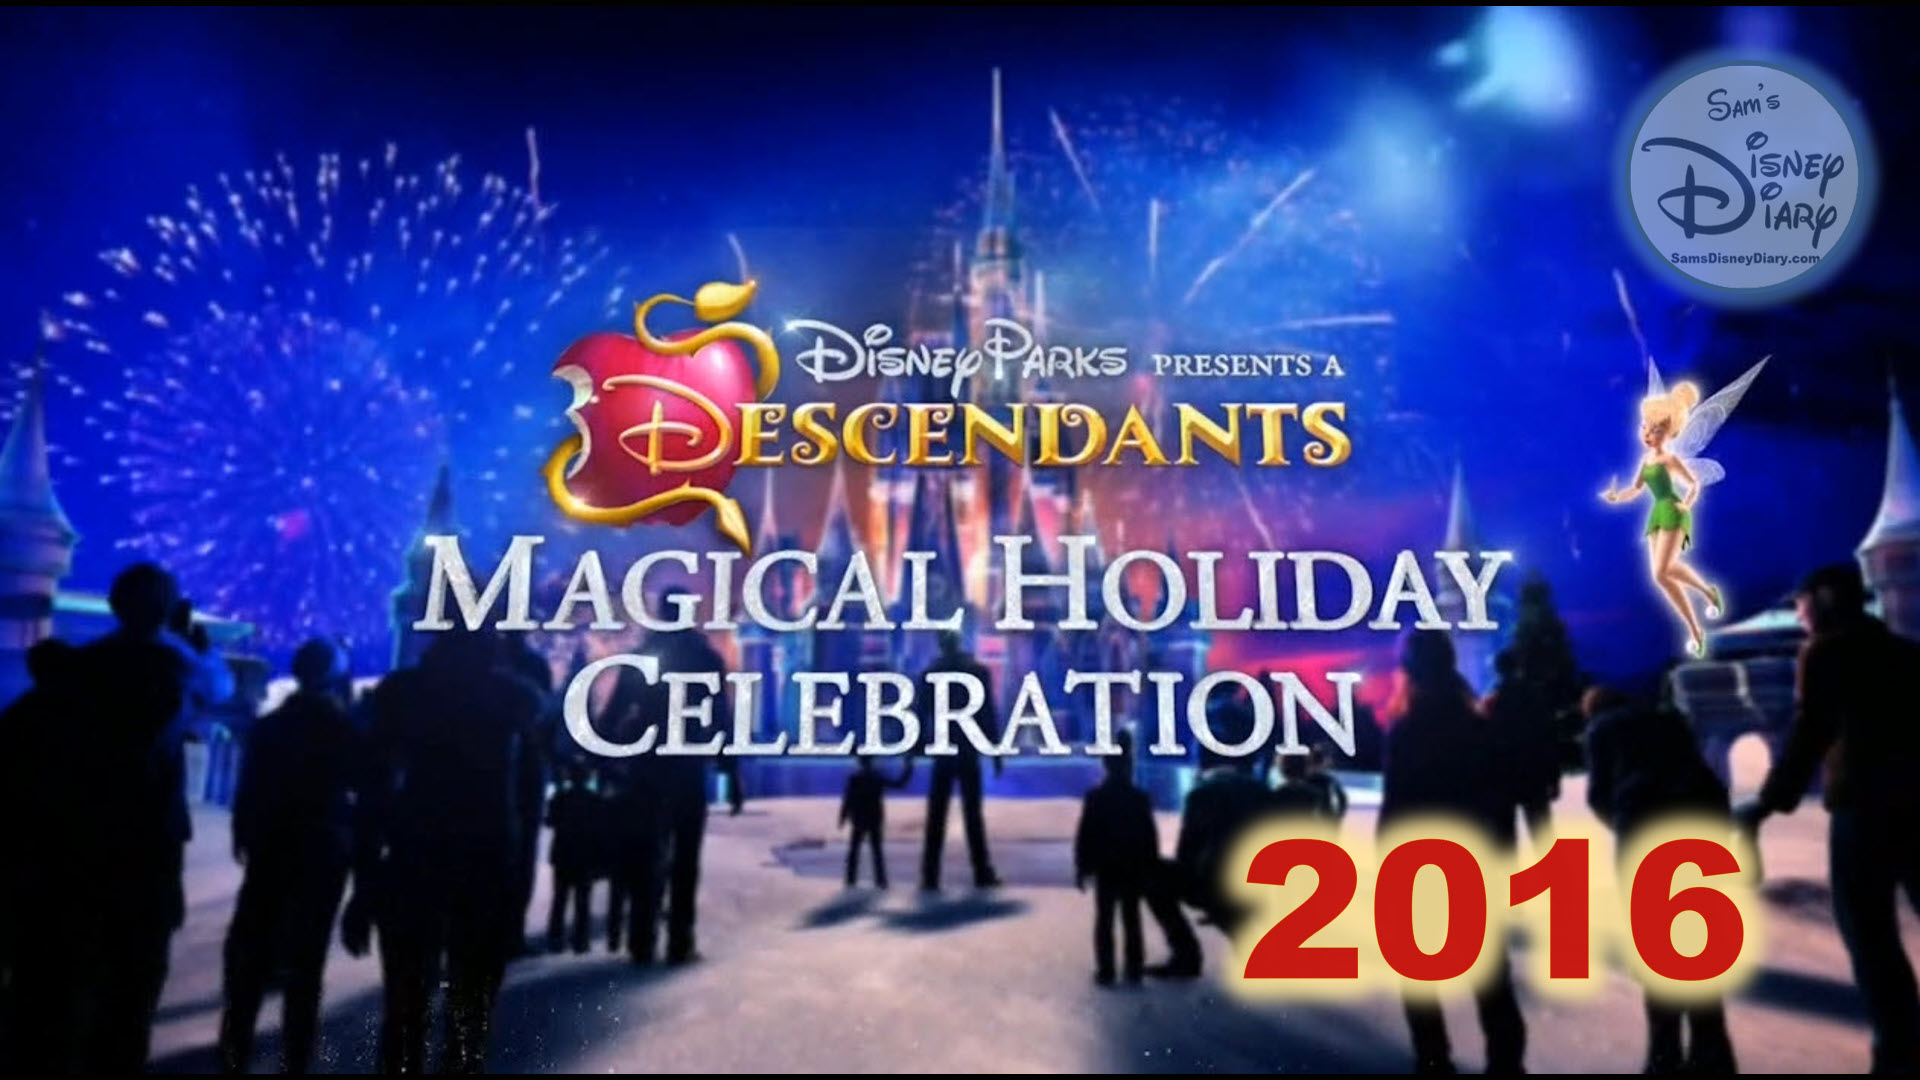  Holiday Magic at the Disney Parks: Celebrations Around